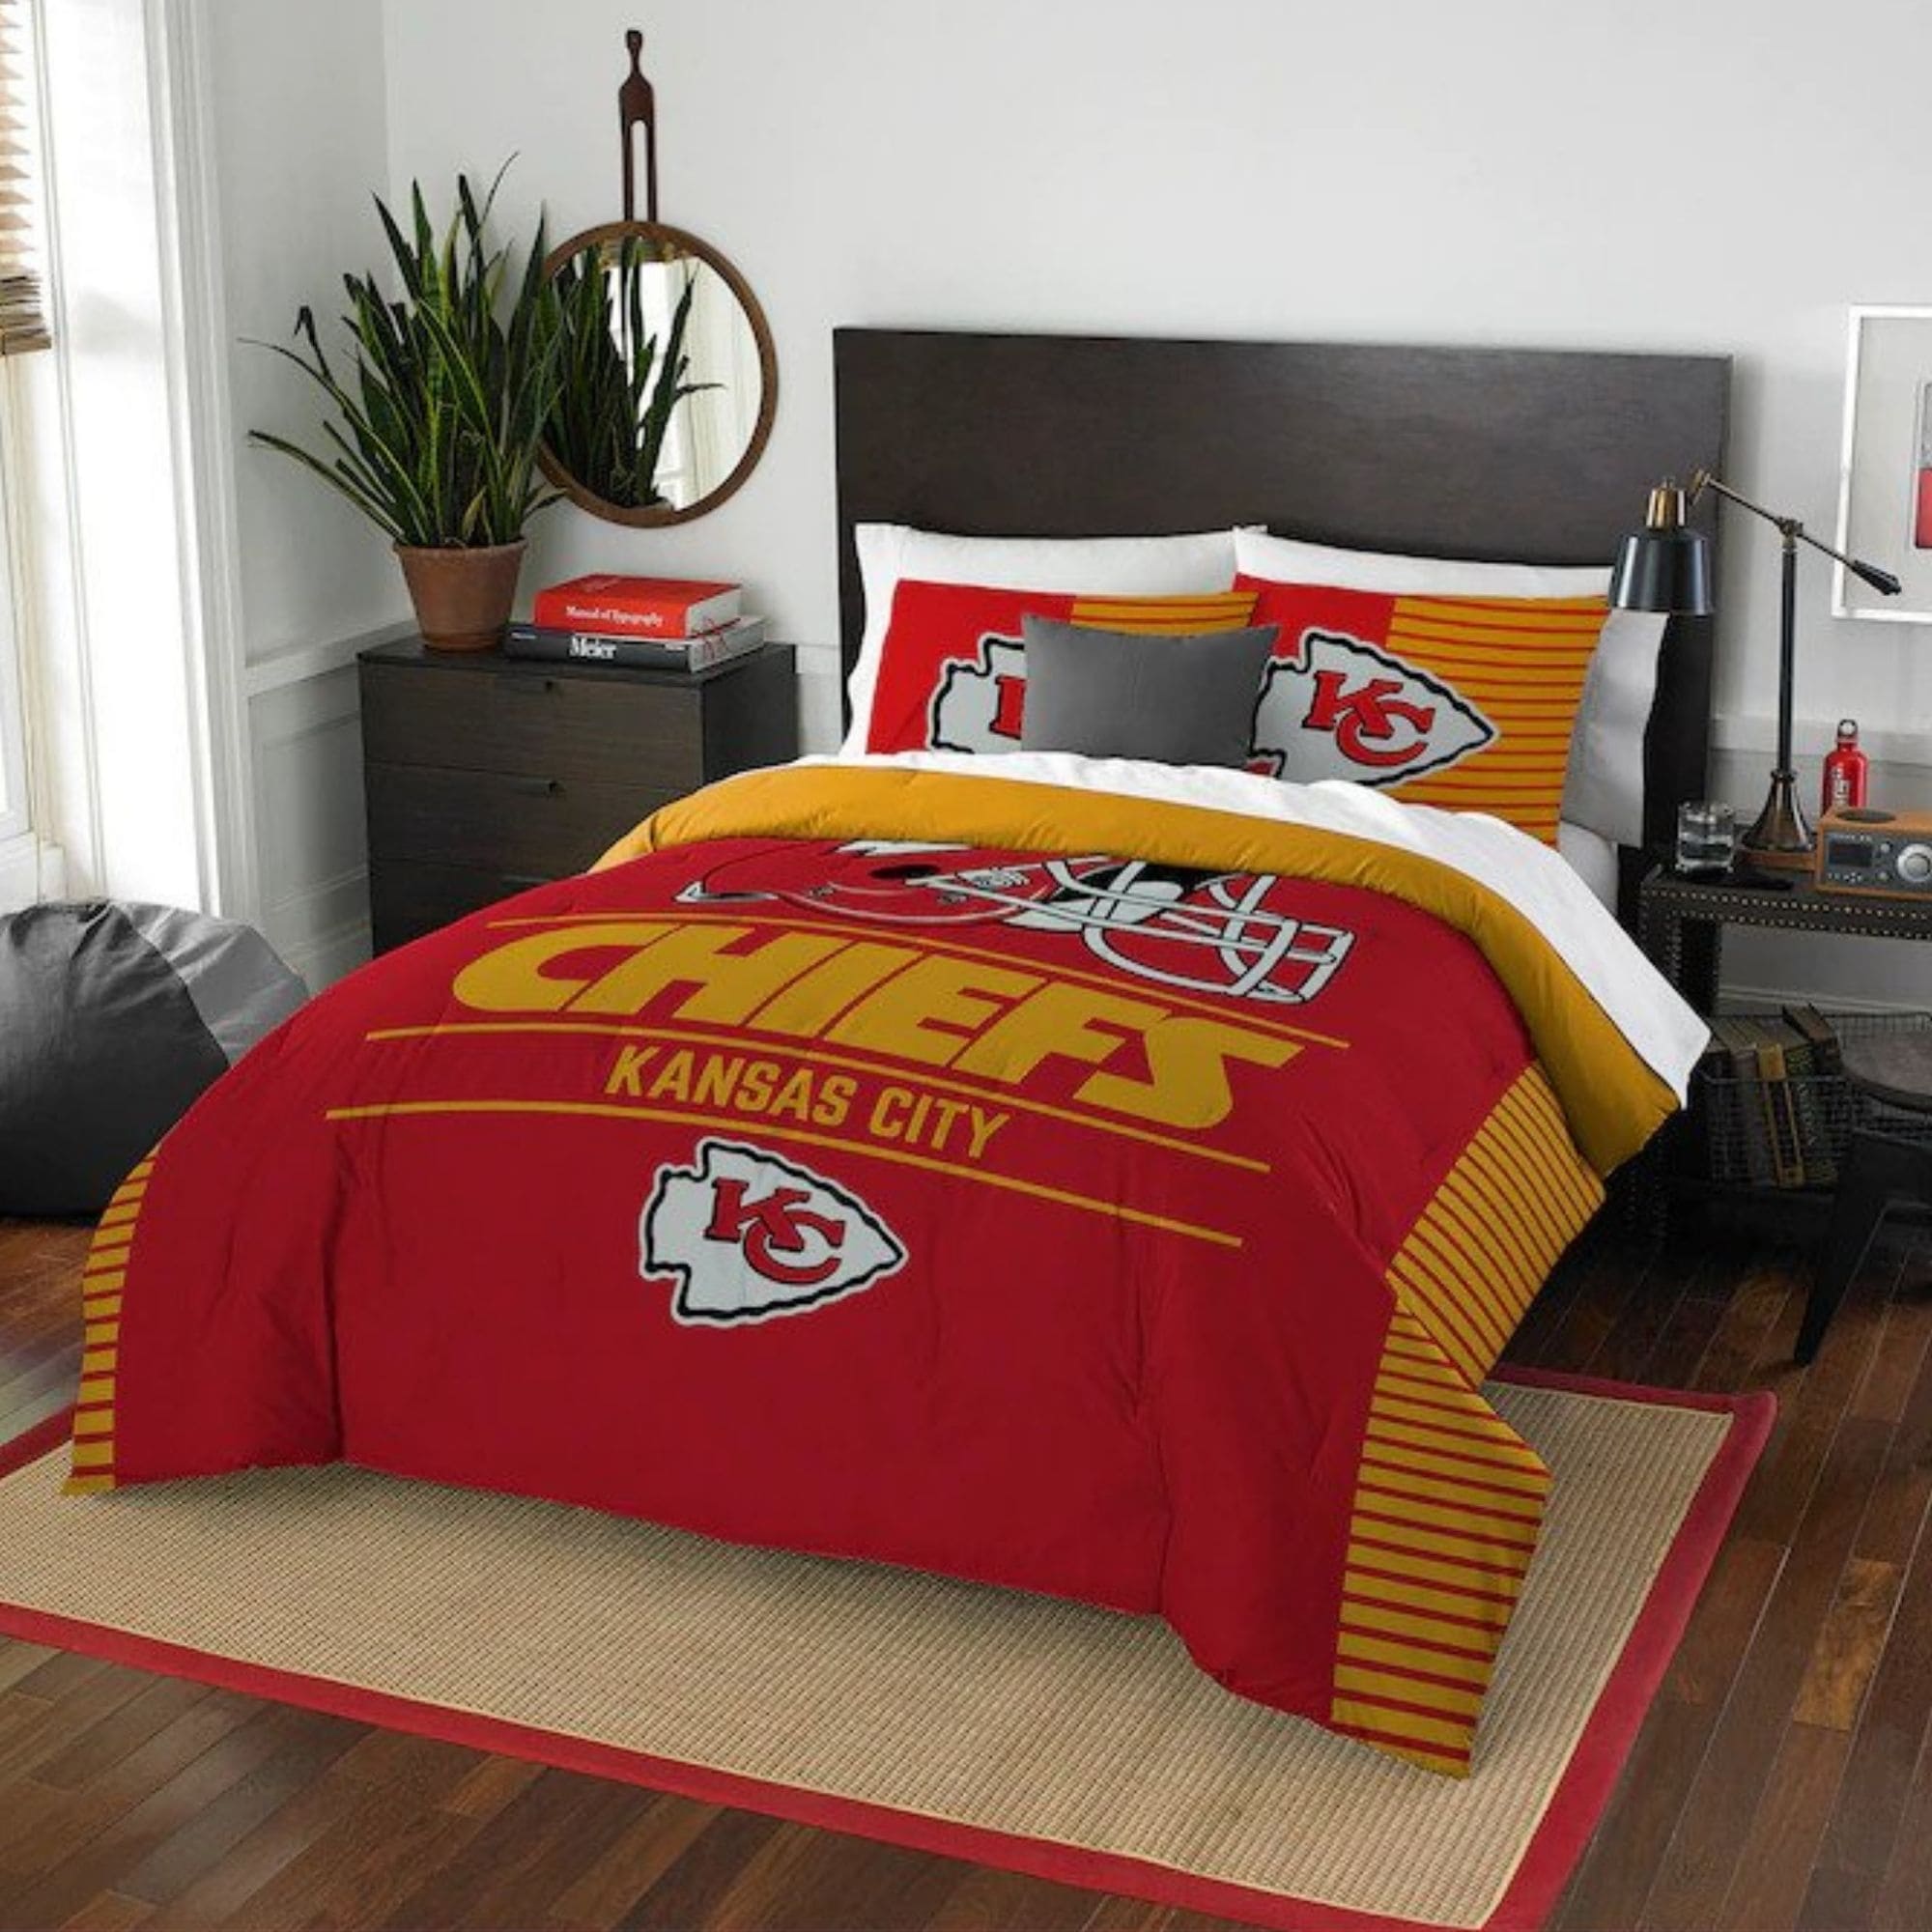 Kansas City Chiefs Bed Set